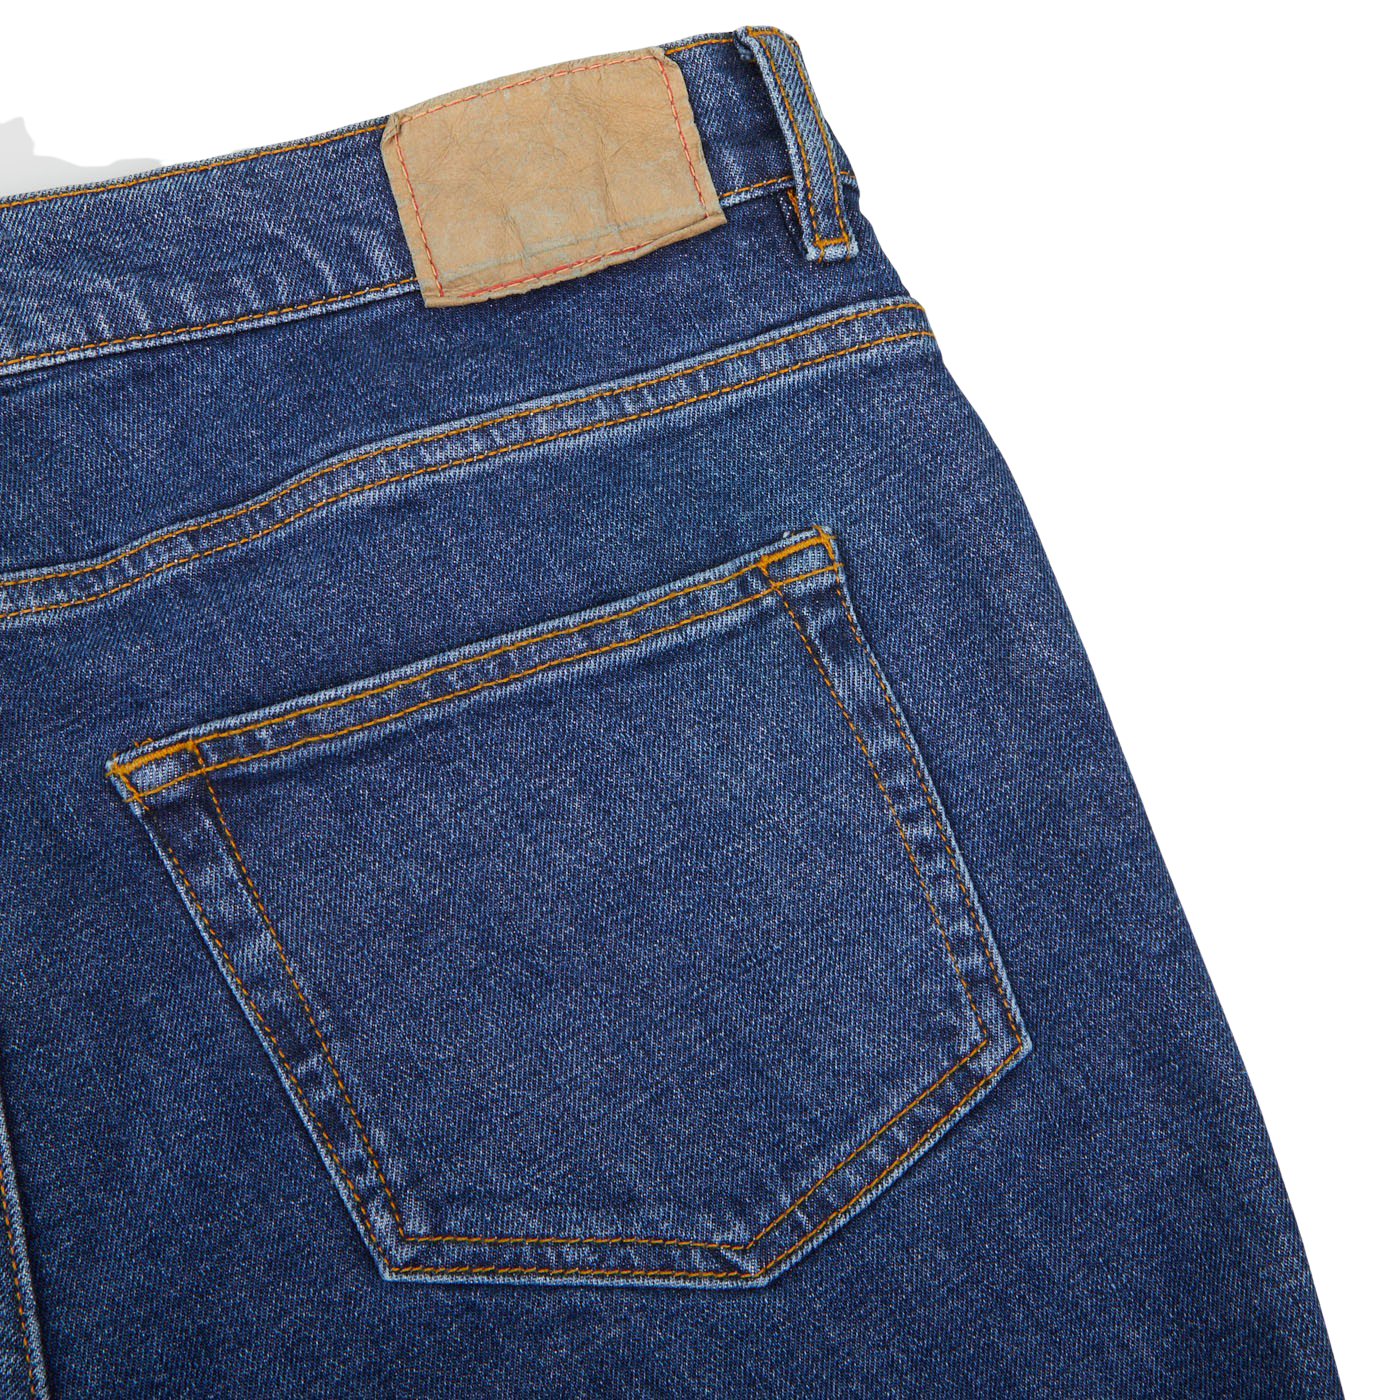 Jeanerica Blue Vintage 95 Cotton SM001 Jeans Pocket